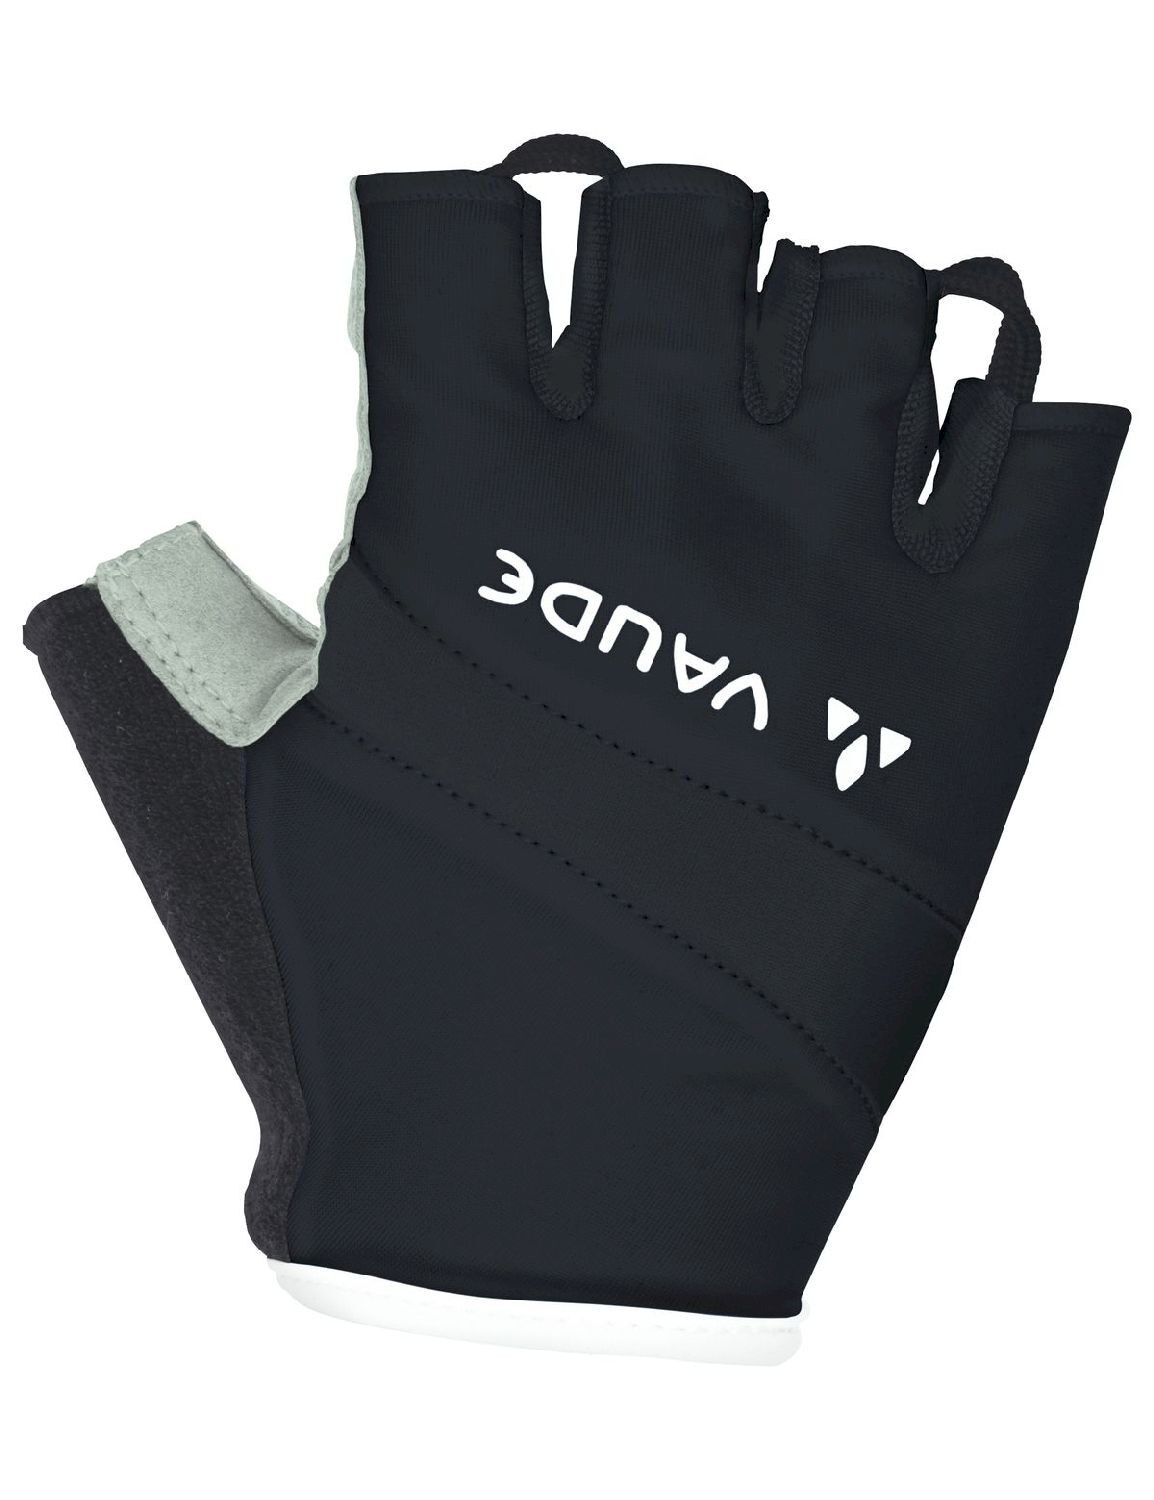 Vaude Active Gloves - Guanti corti ciclismo - Donna